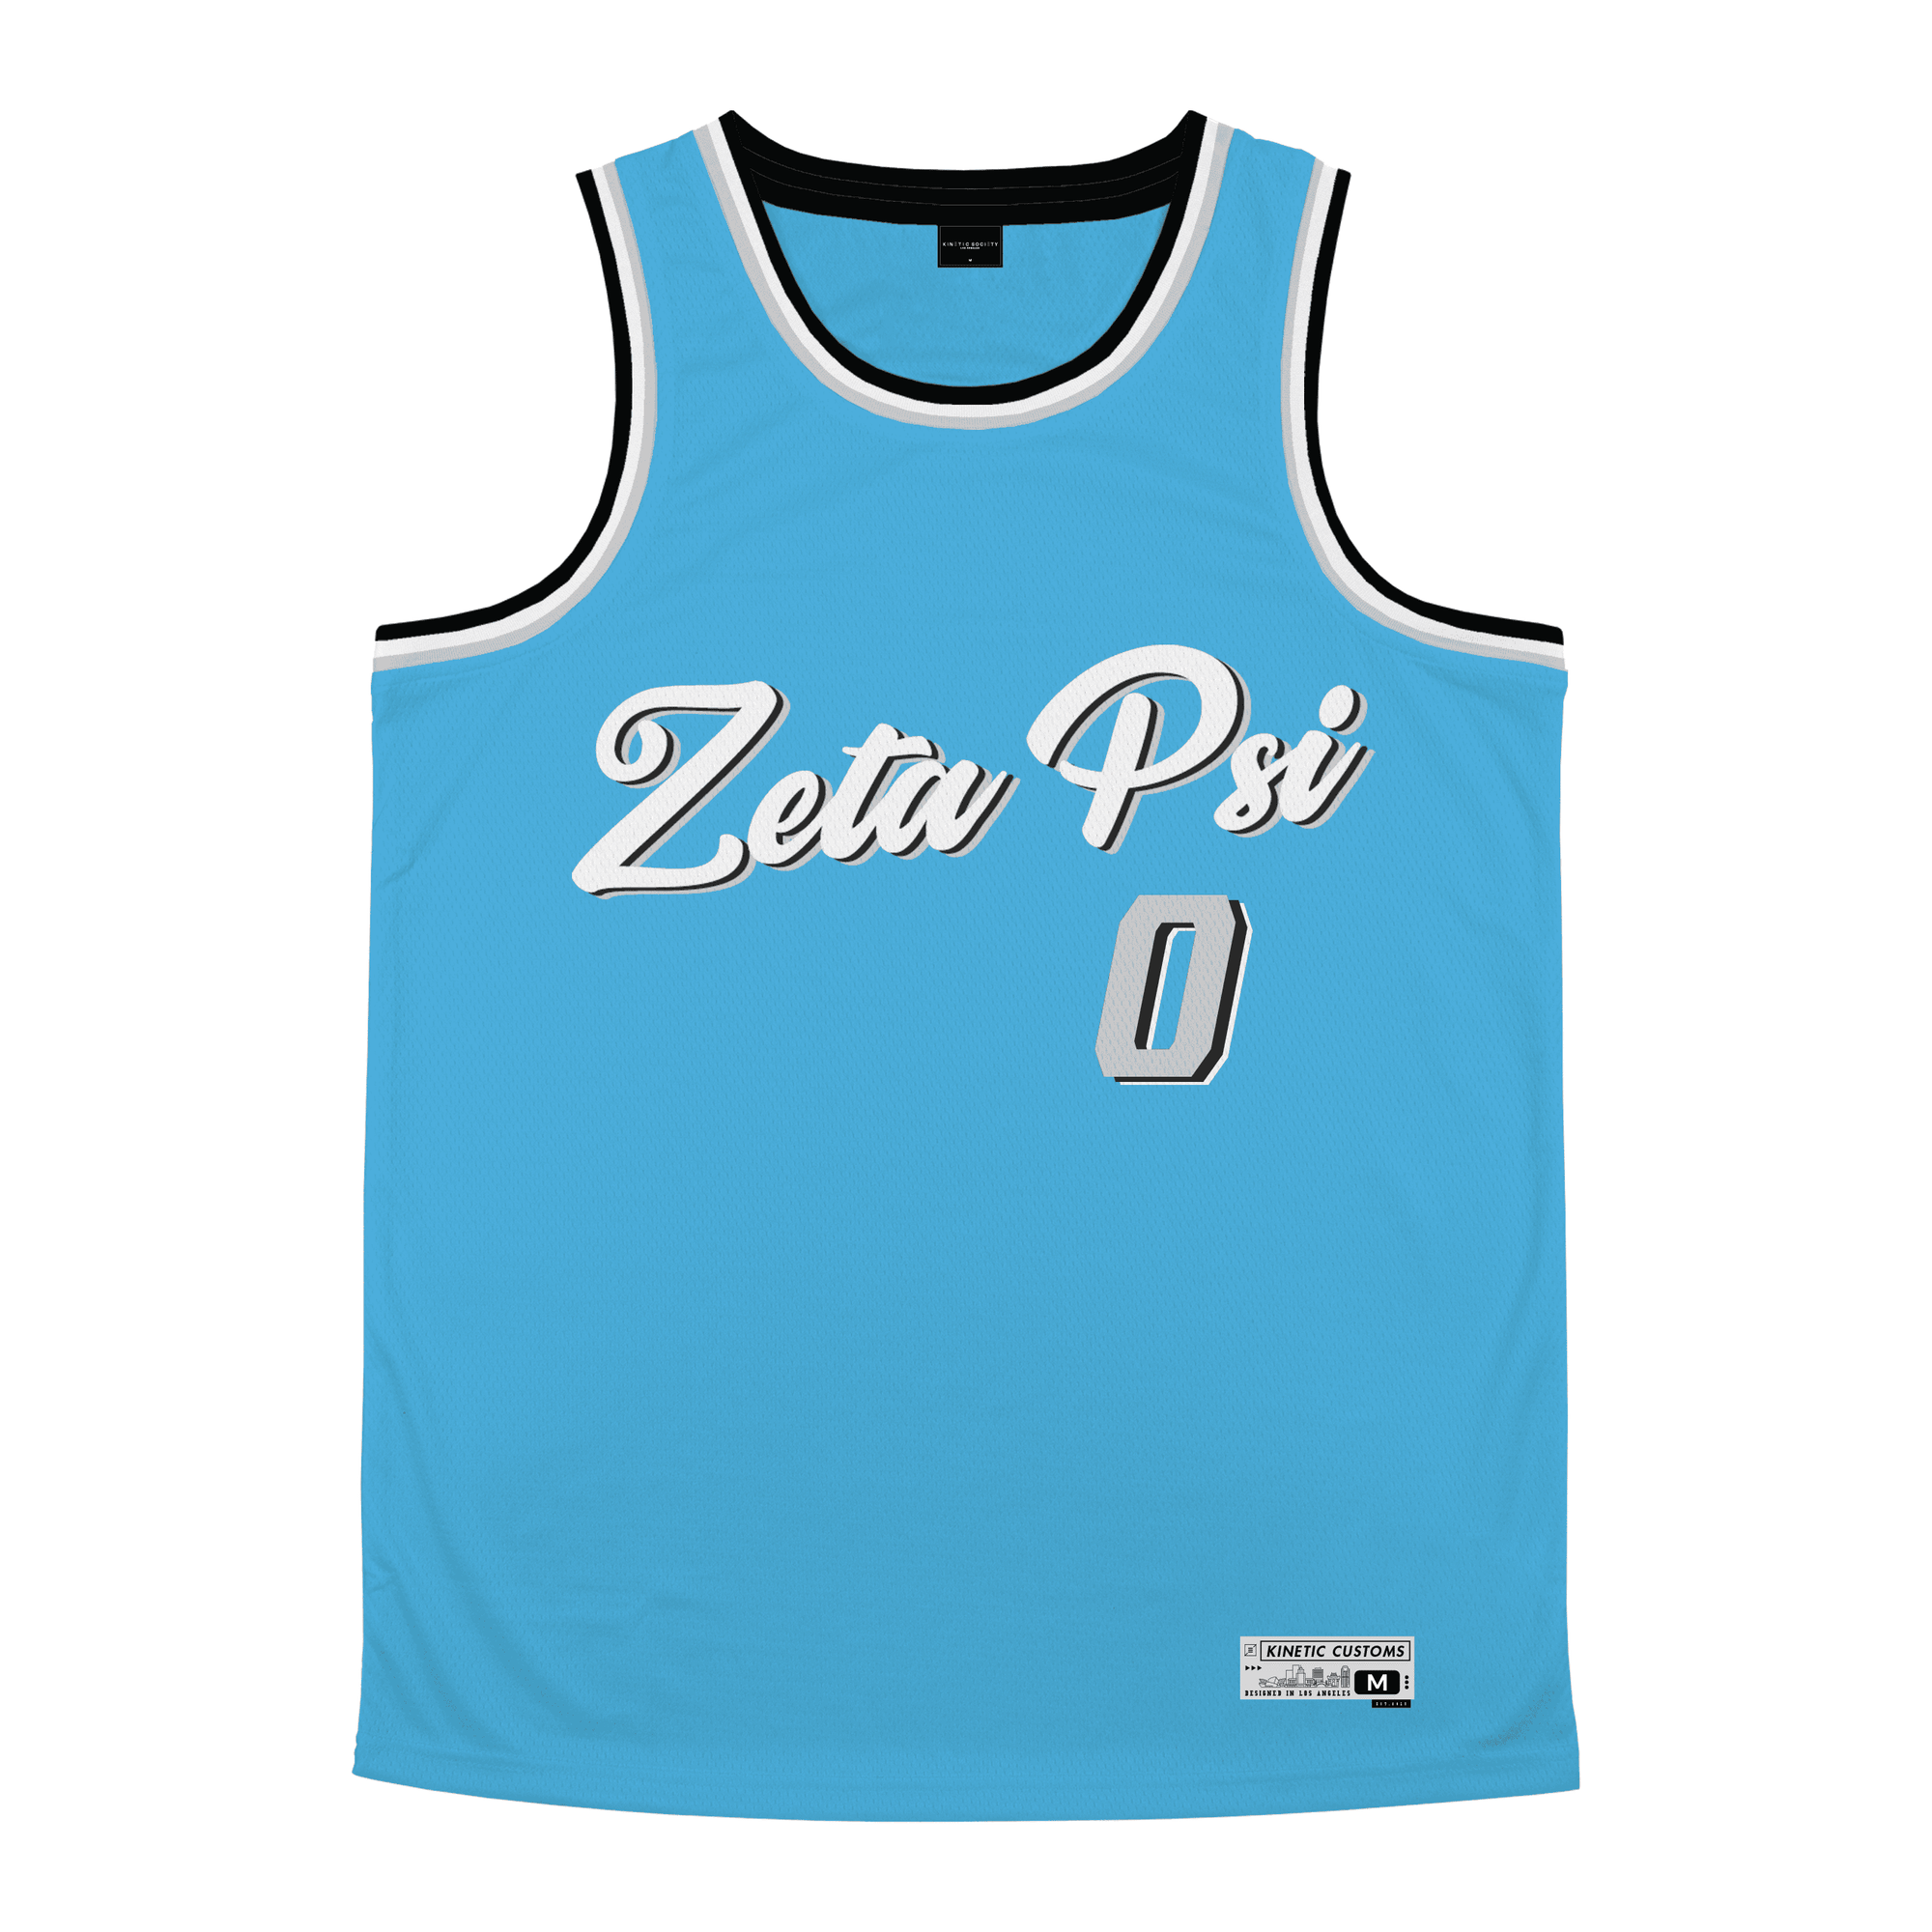 Zeta Psi - Pacific Mist Basketball Jersey